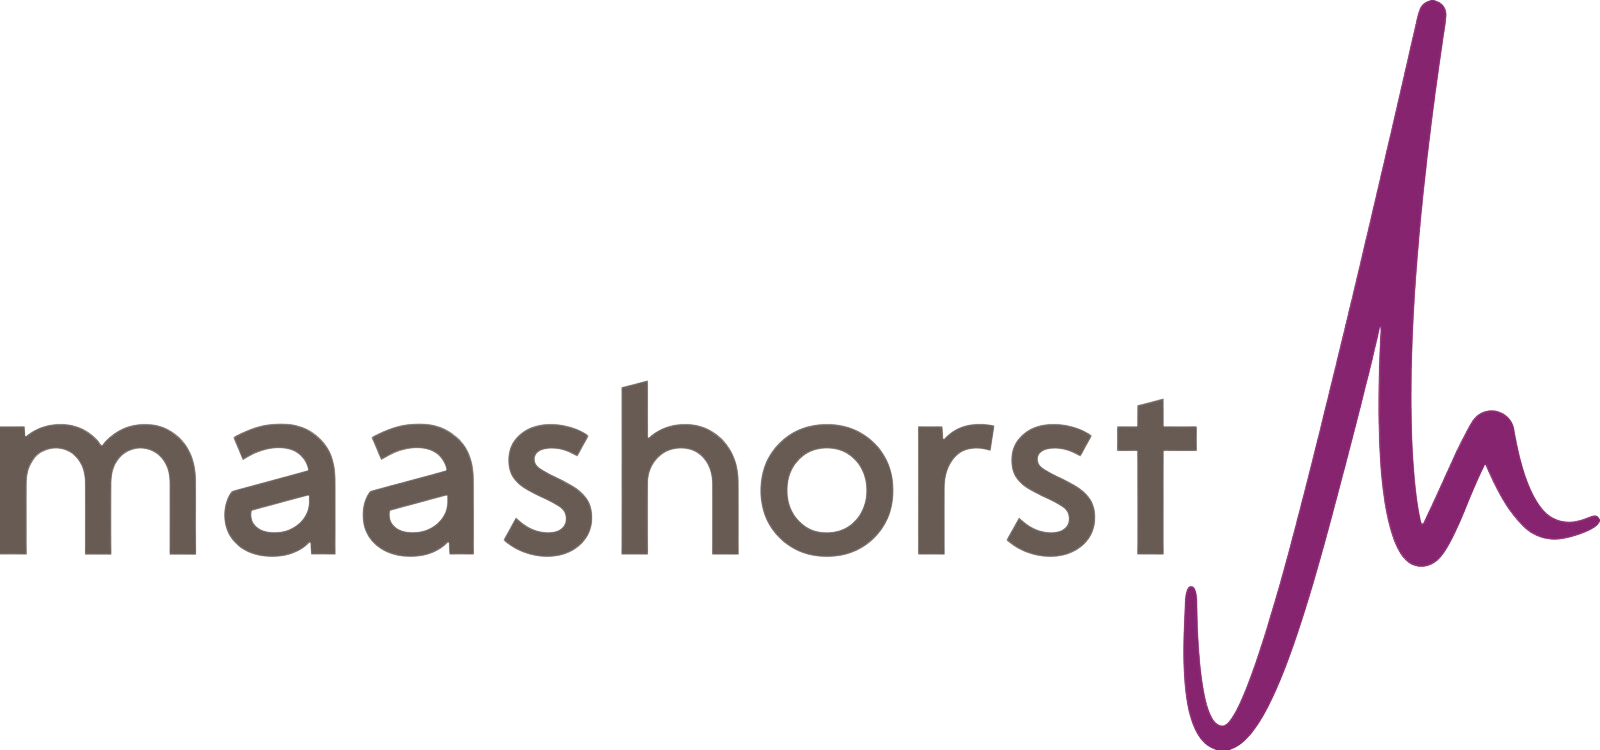 Gemeenste Maashorst logo